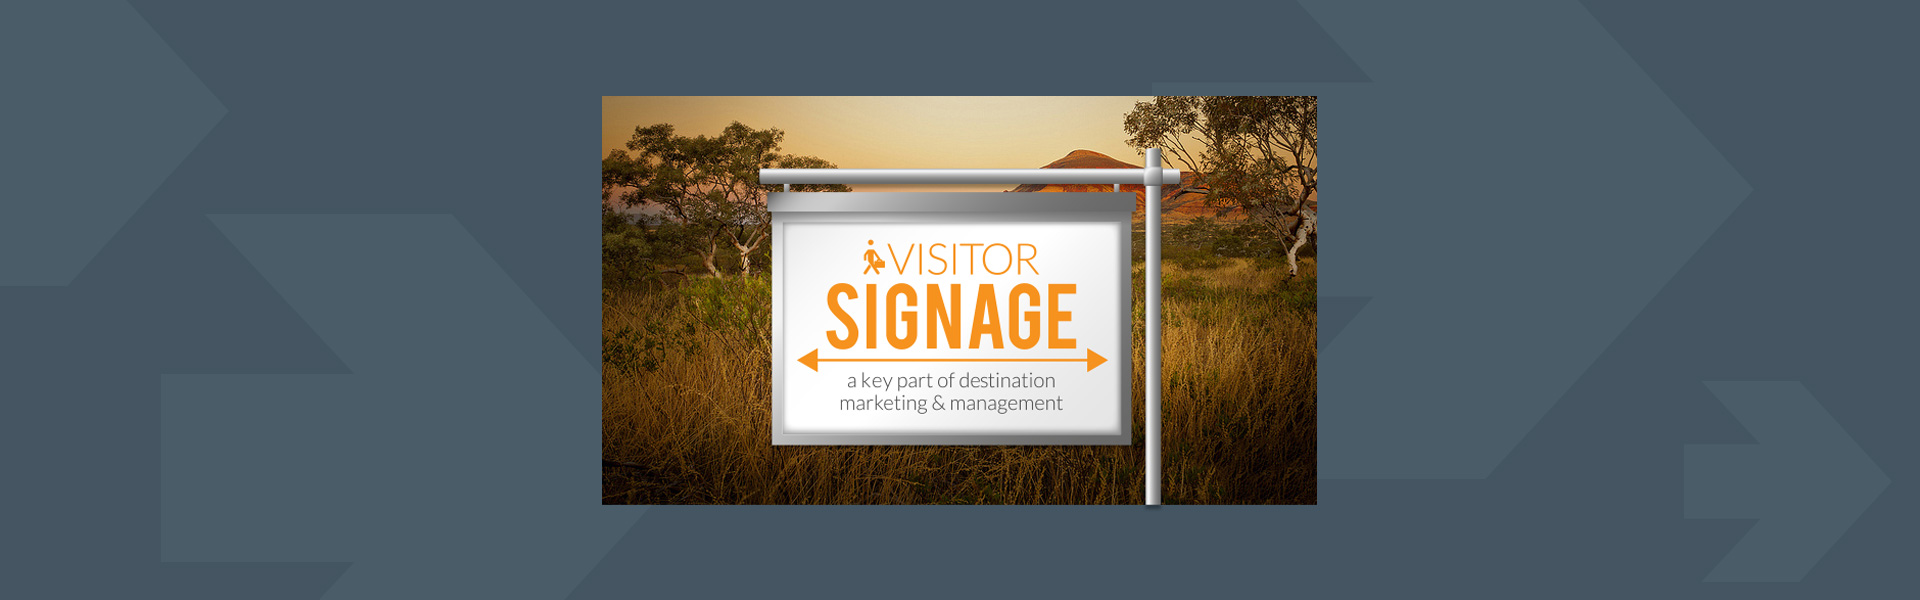 Visitor signage